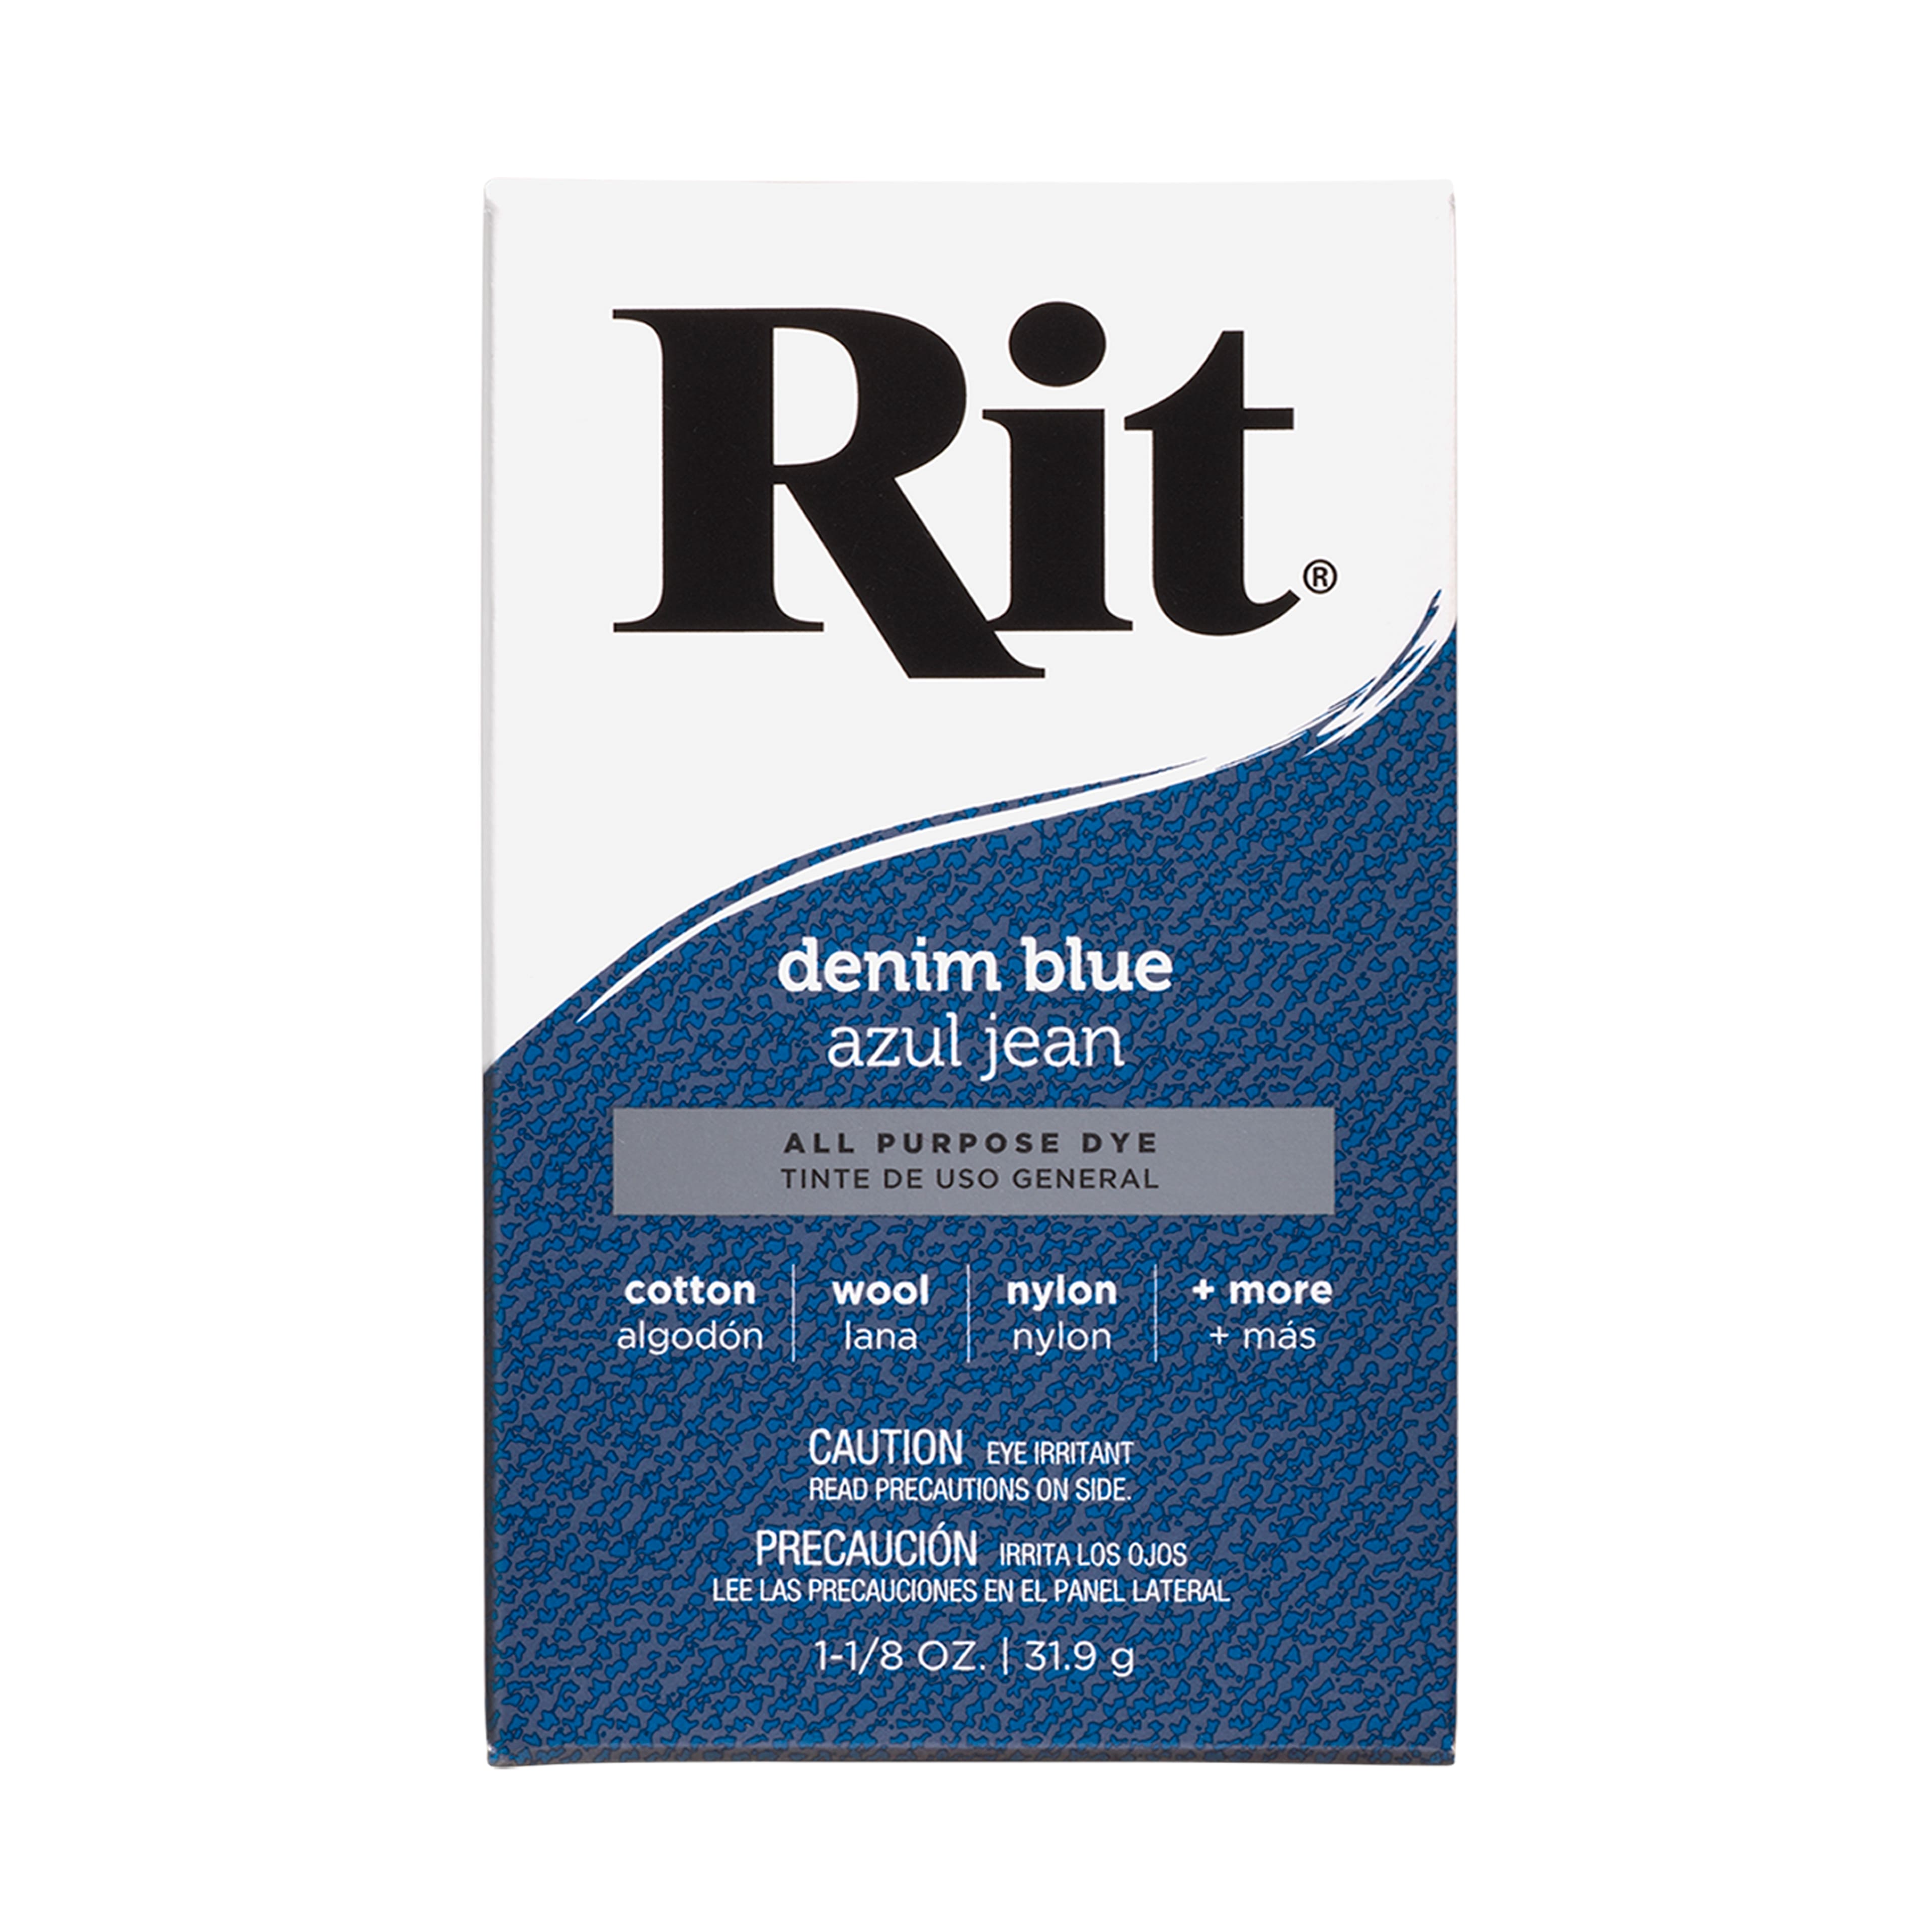 Rit Dye-Powder by Manhattan Wardrobe Supply